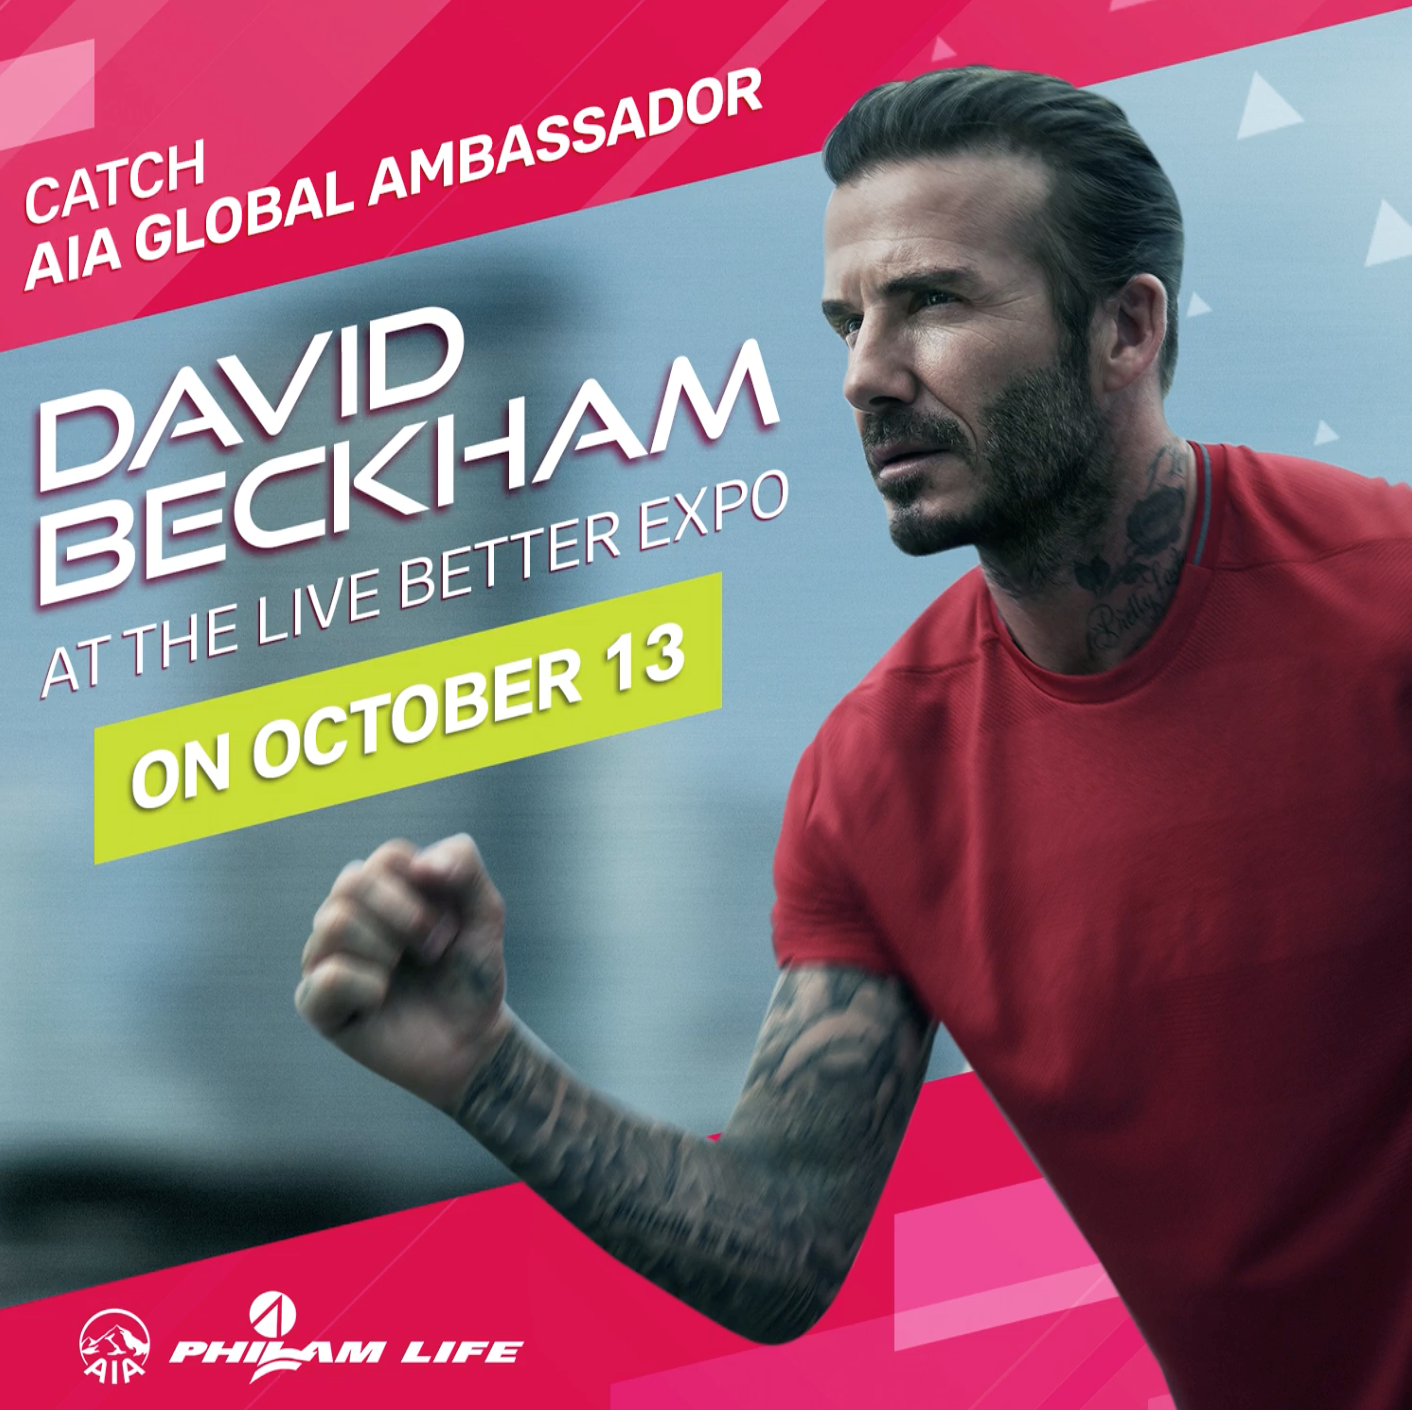 David Beckham at live better expo